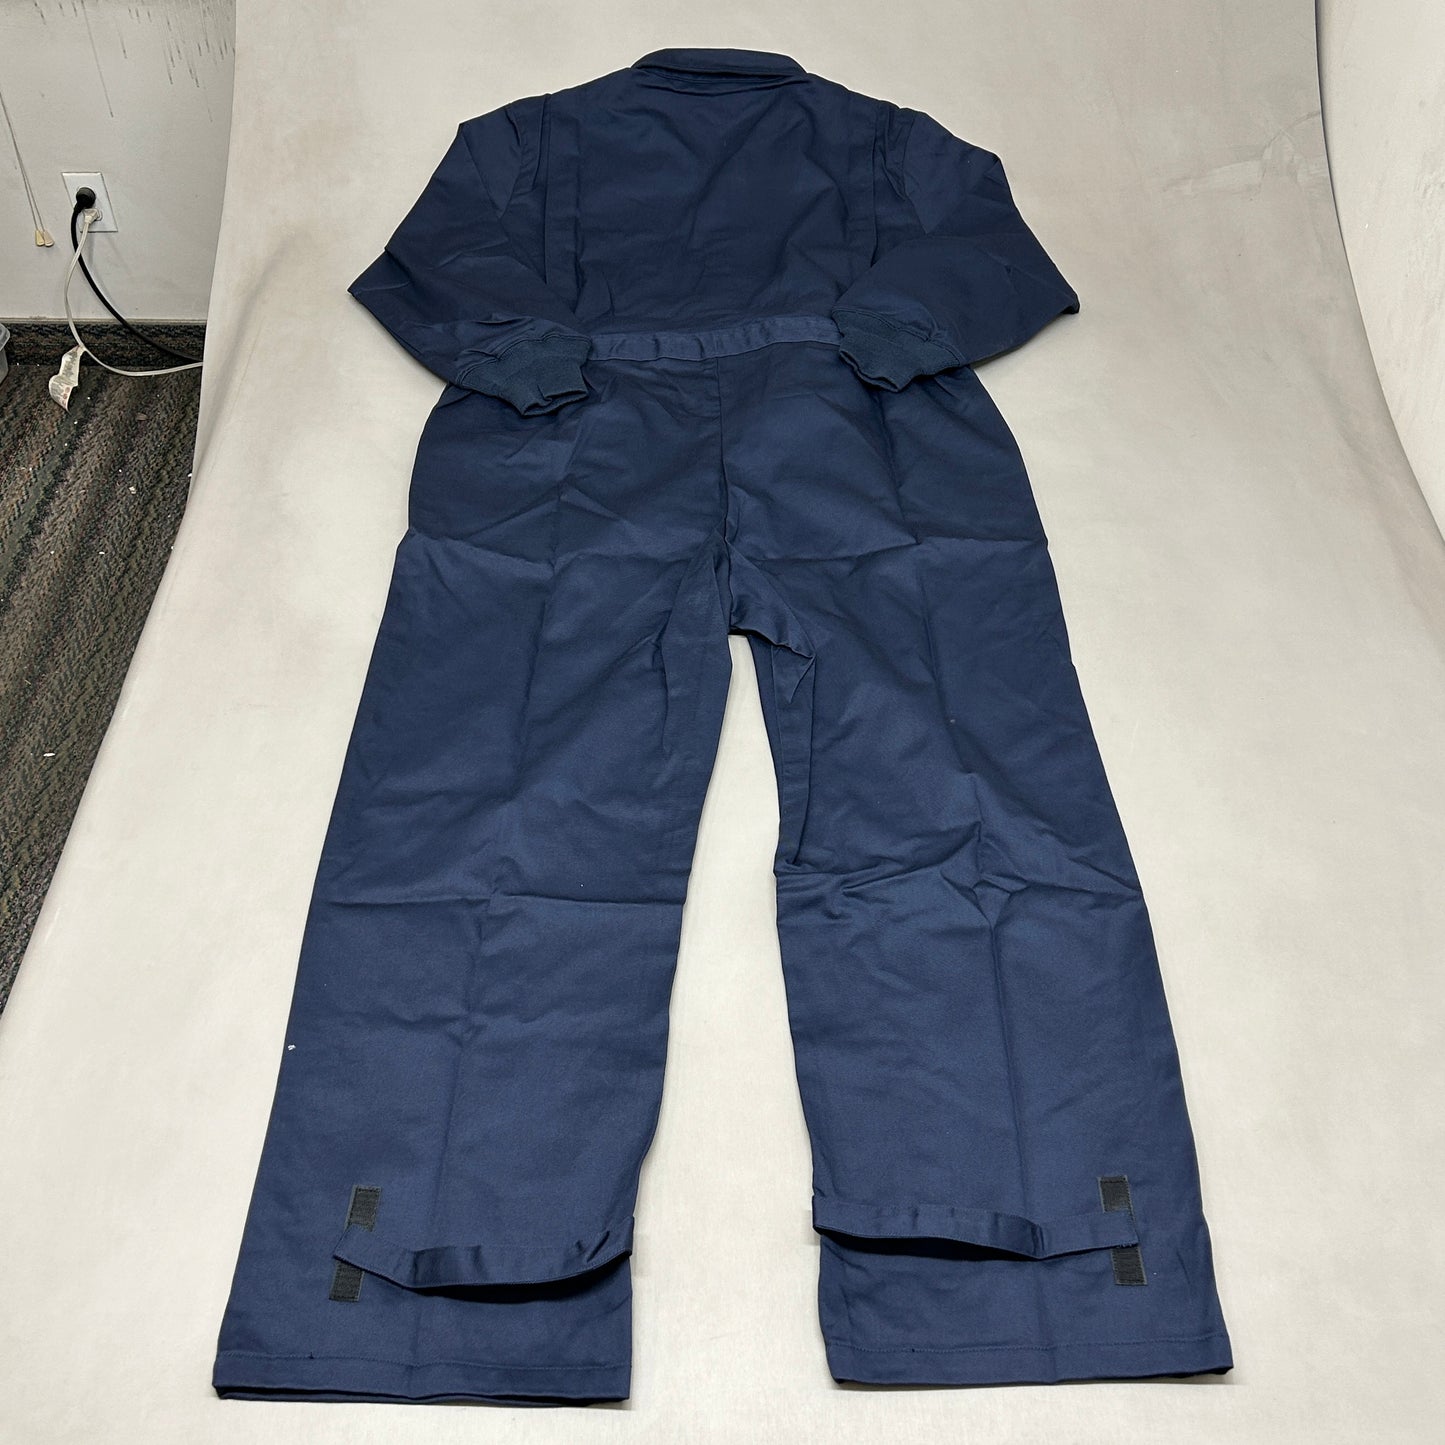 PIP Fire-Resistant Coveralls Men's Sz L Blue 32575, 9100-2160D/L (New)